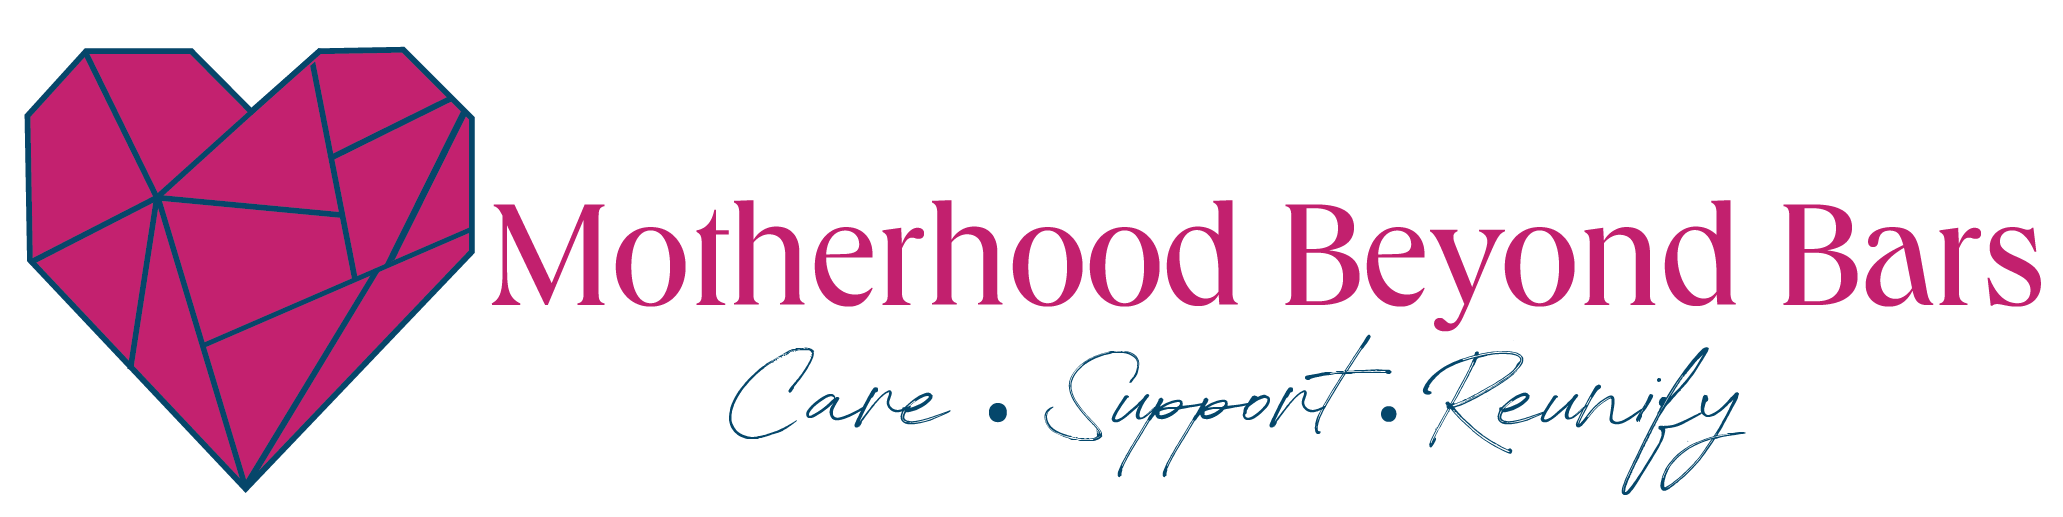 Motherhood Beyond Bars logo